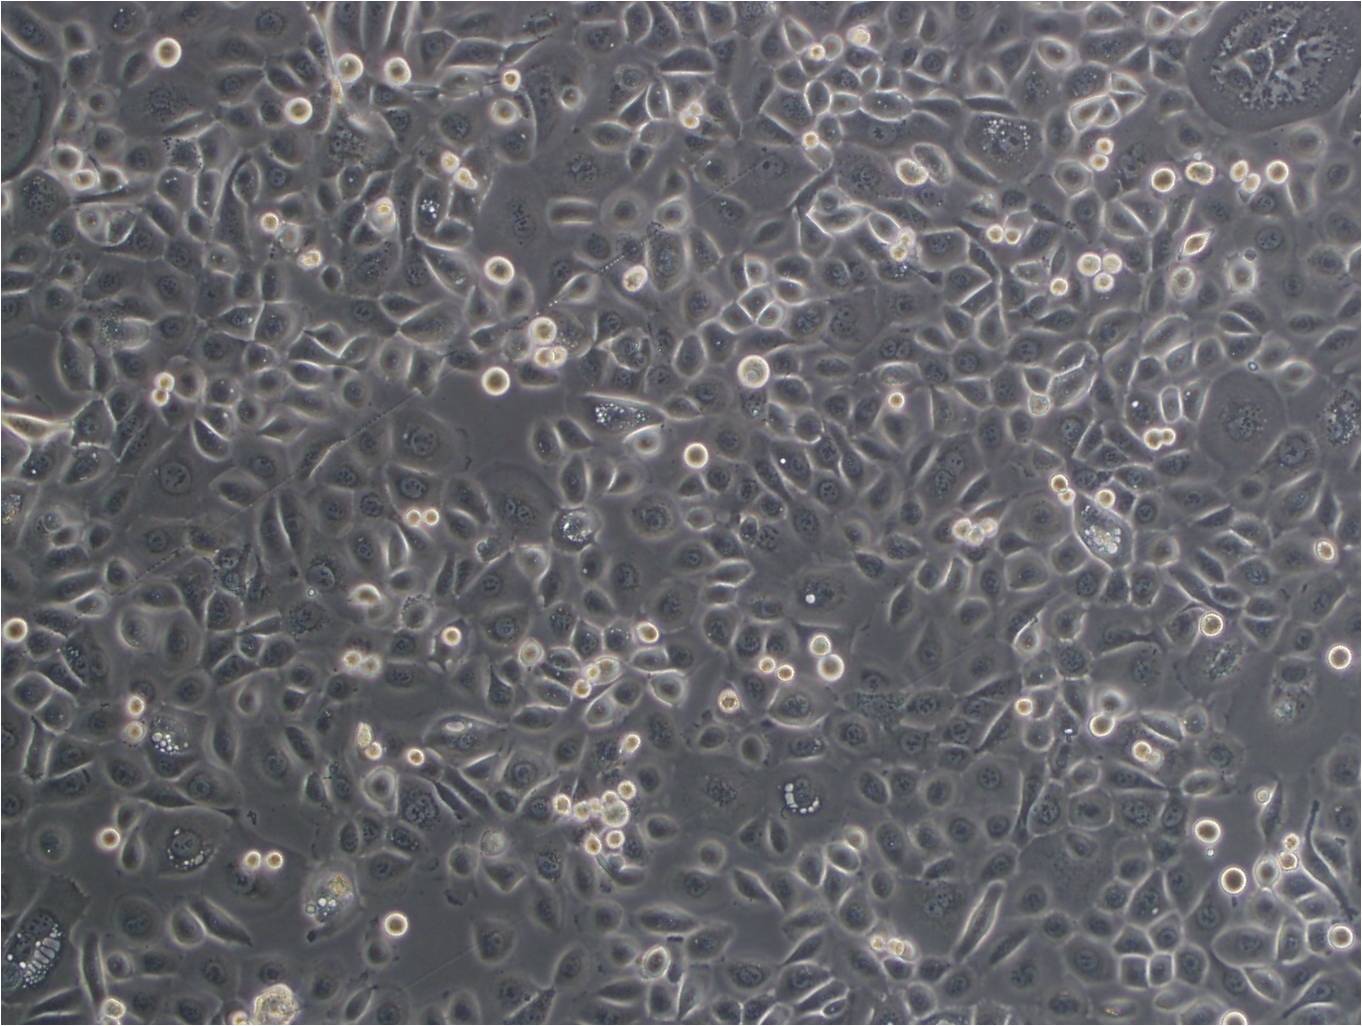 FaDu epithelioid cells人咽鳞癌细胞系,FaDu epithelioid cells